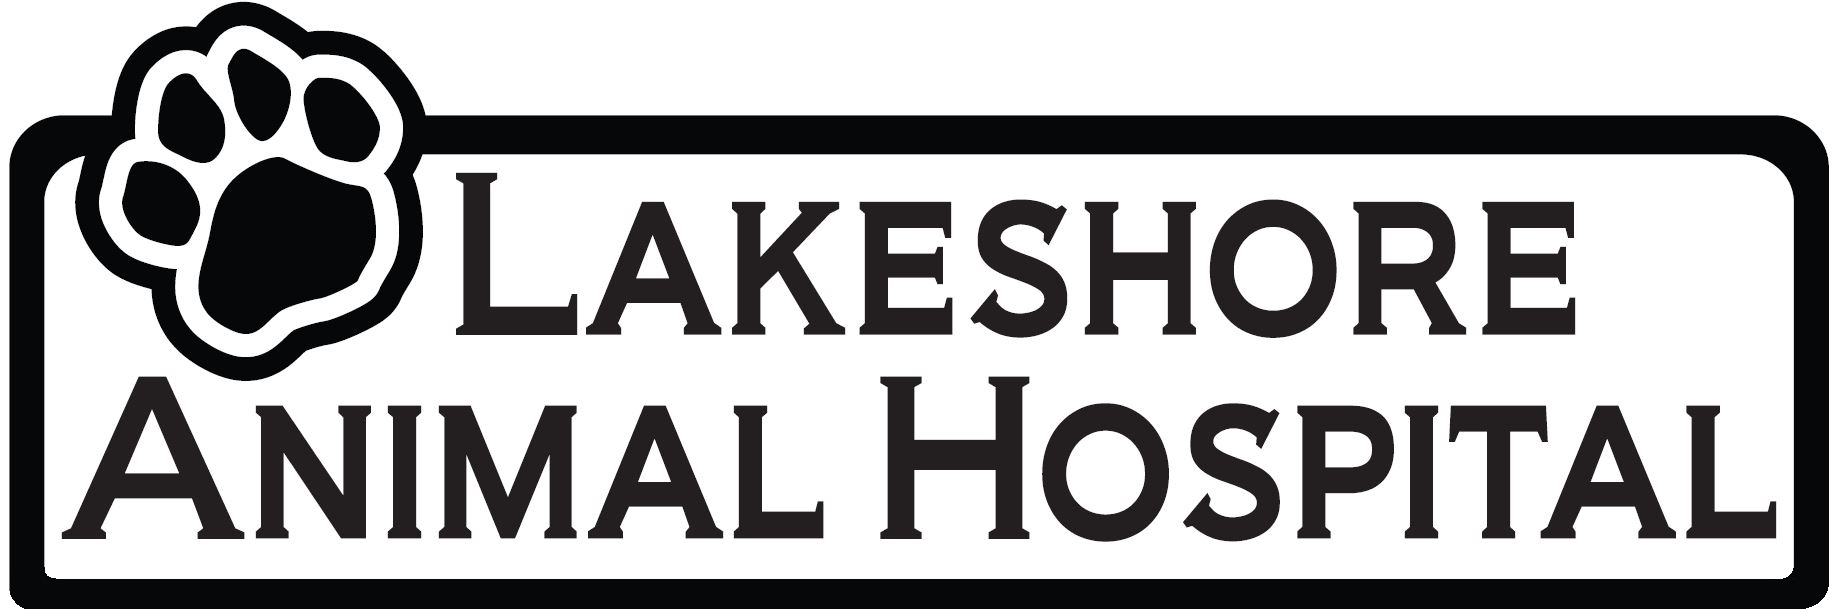 Lakeshore Animal Hospital